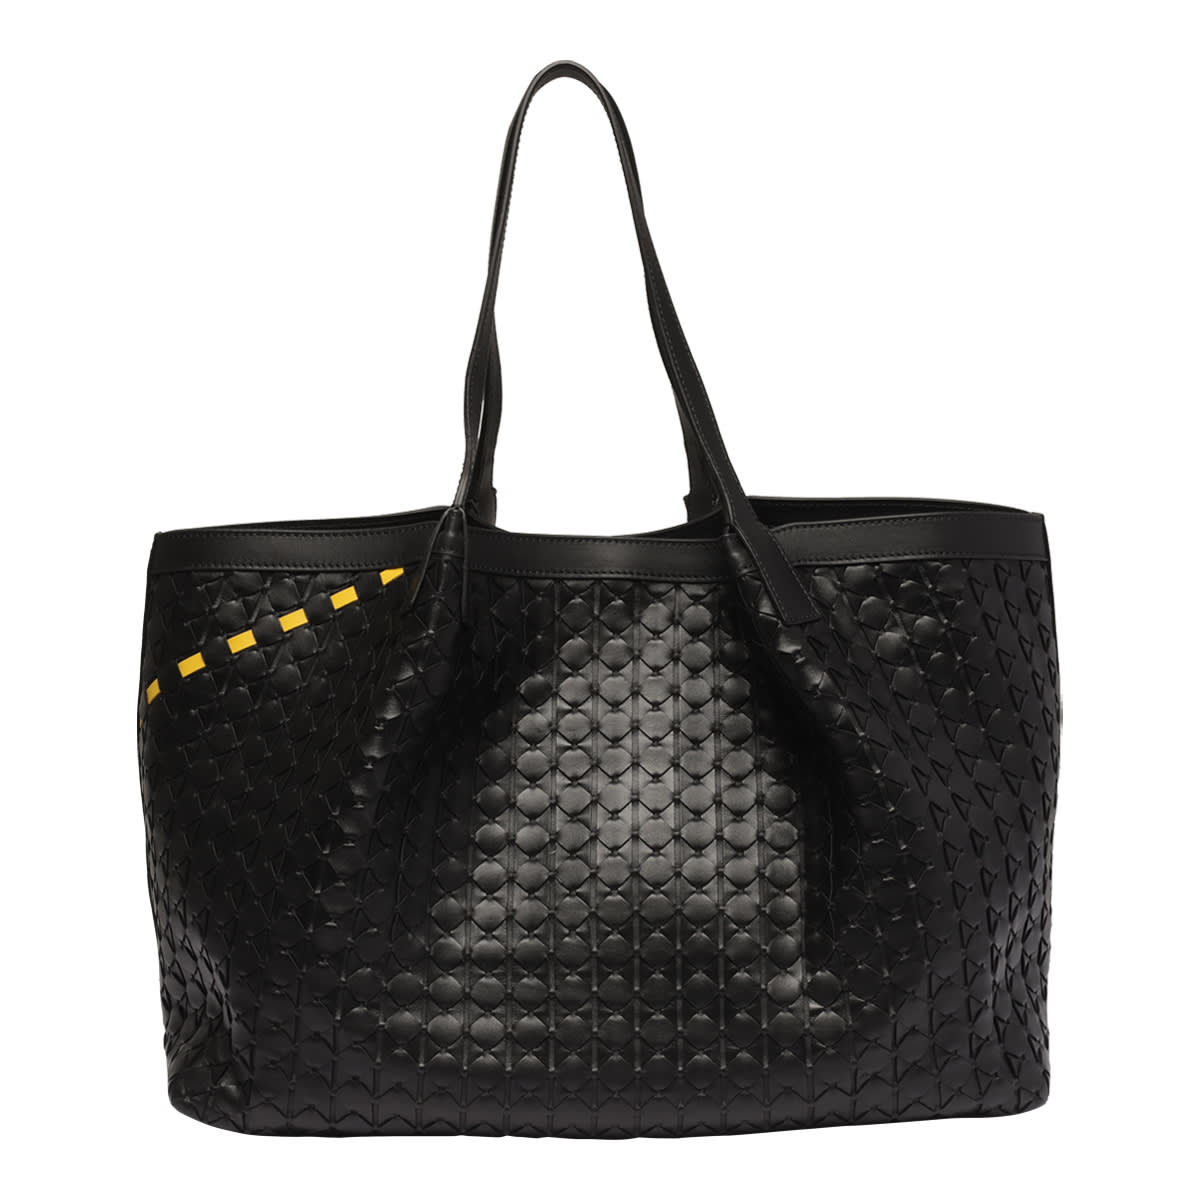 Shop Serapian Secret Tote Mosaico Bag In Black